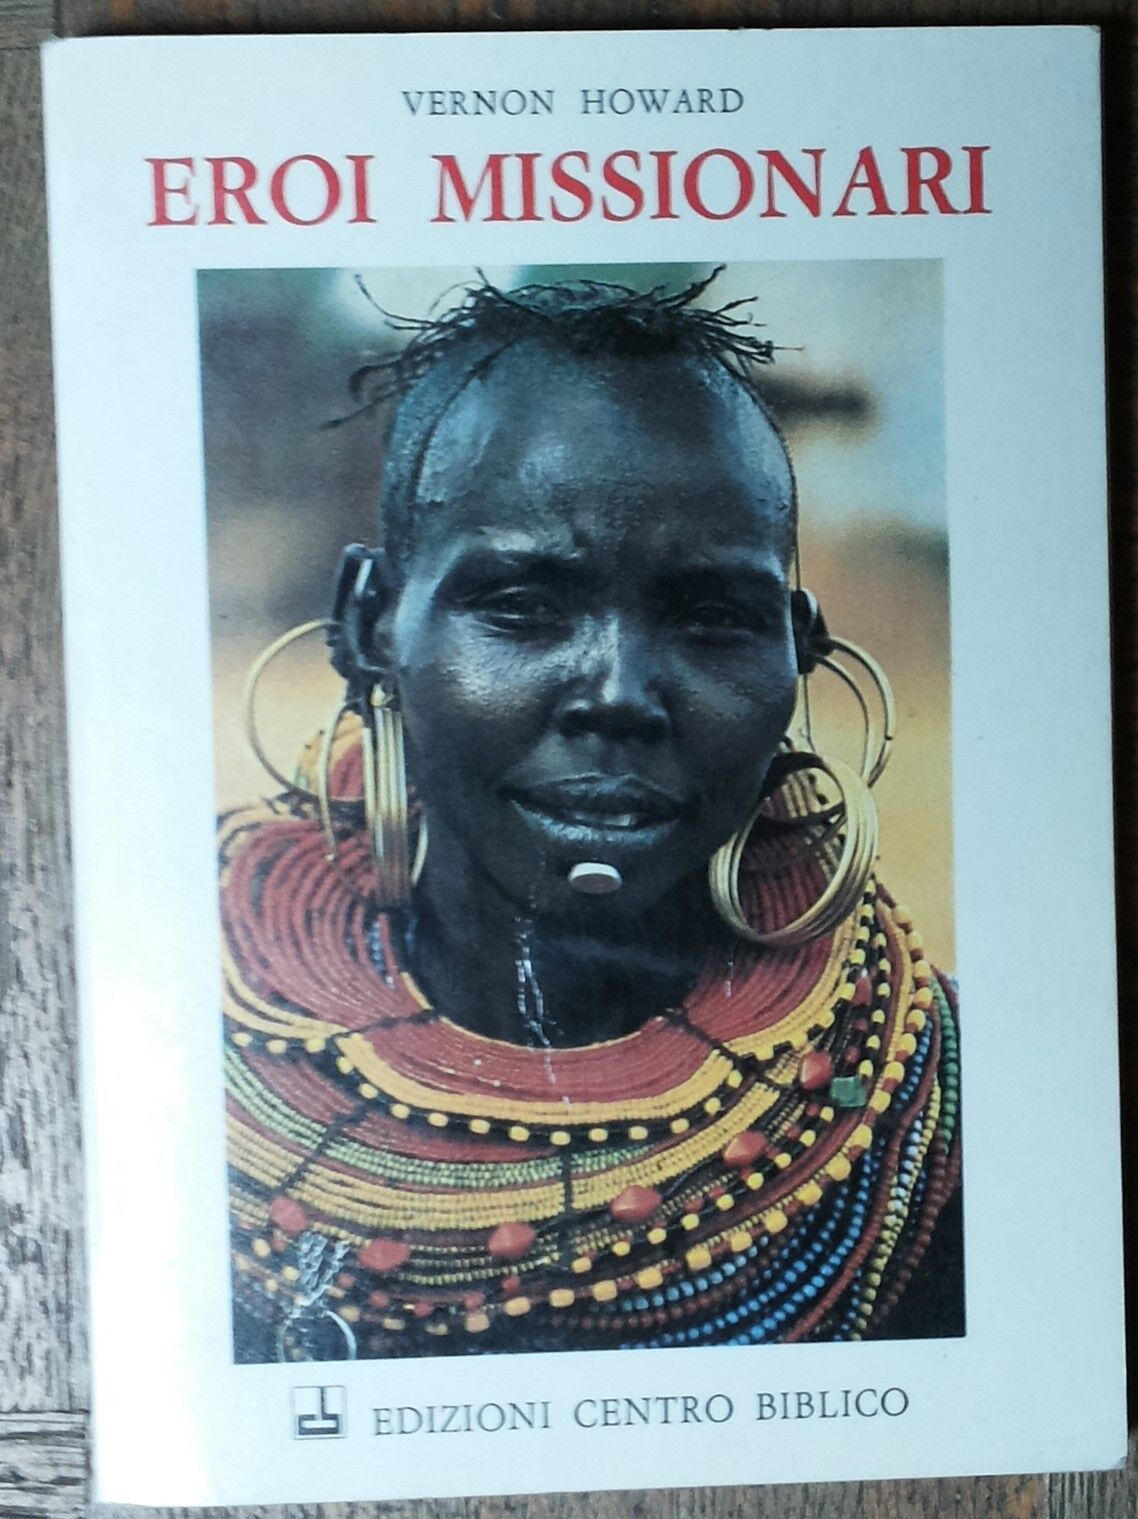 Eroi missionari - Howard - Centro Biblico,1985 - R